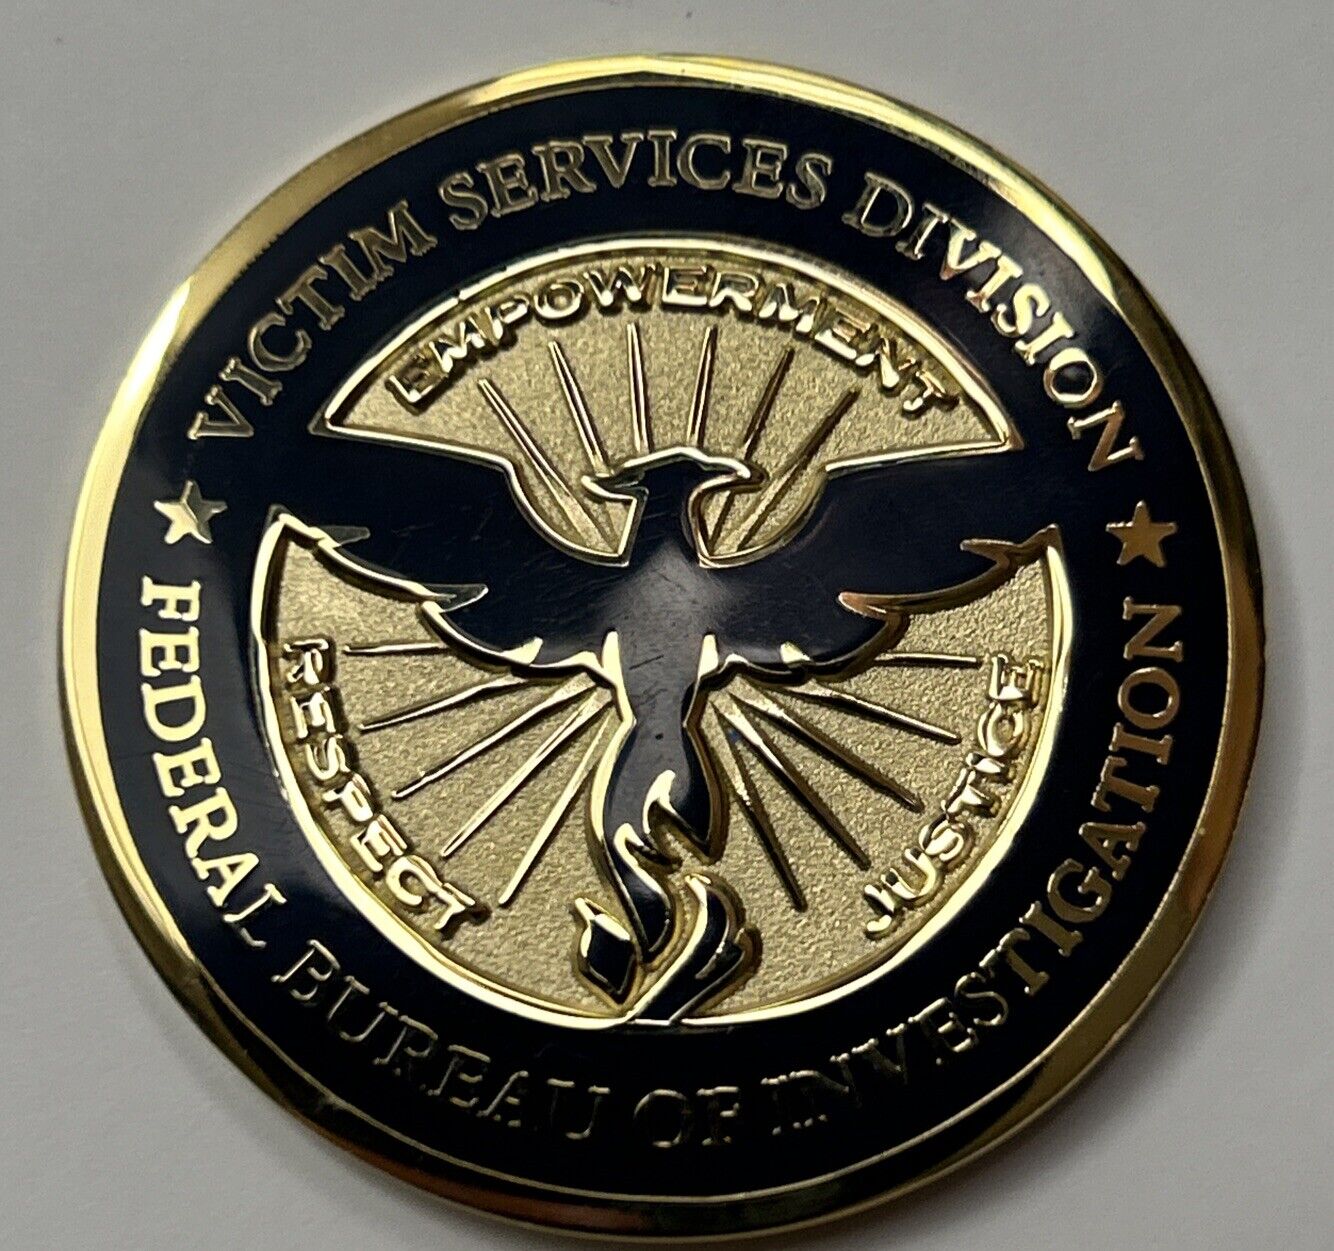 FBI HQ Victim Services Division Challenge Coin